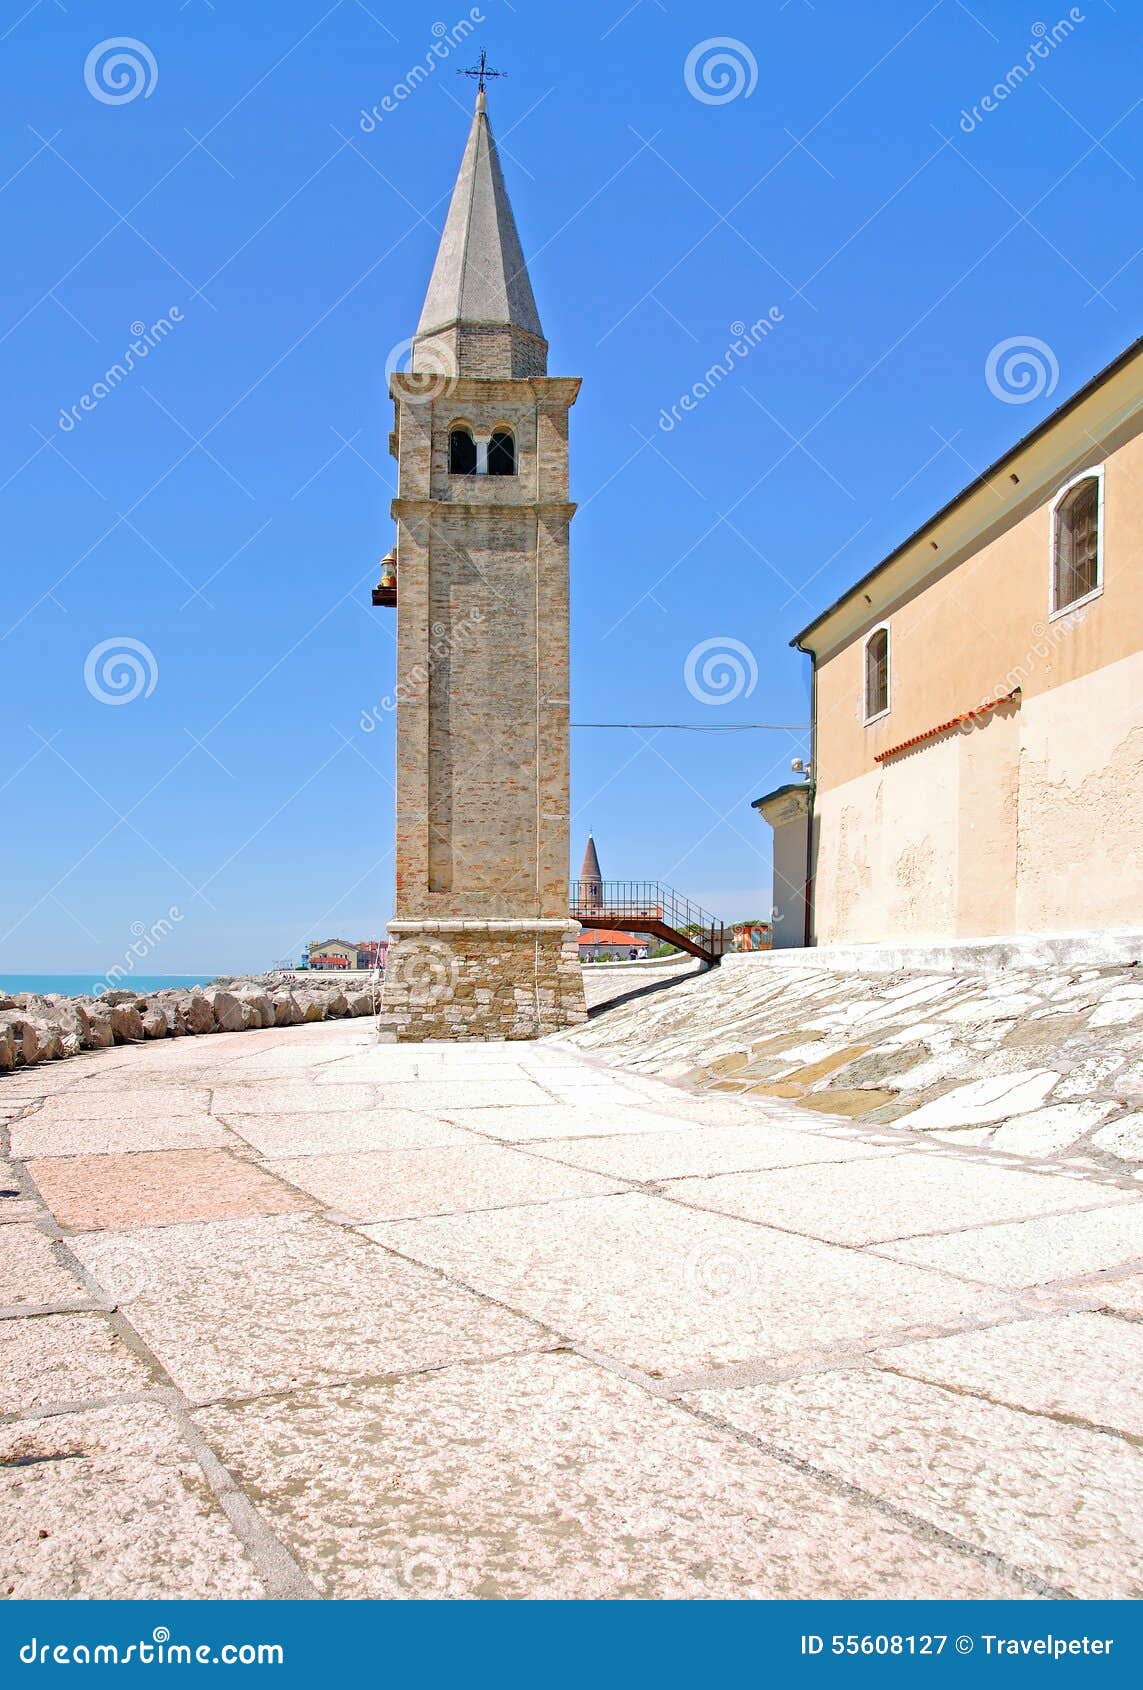 church madonna dell angelo,caorle,adriatic sea,italy